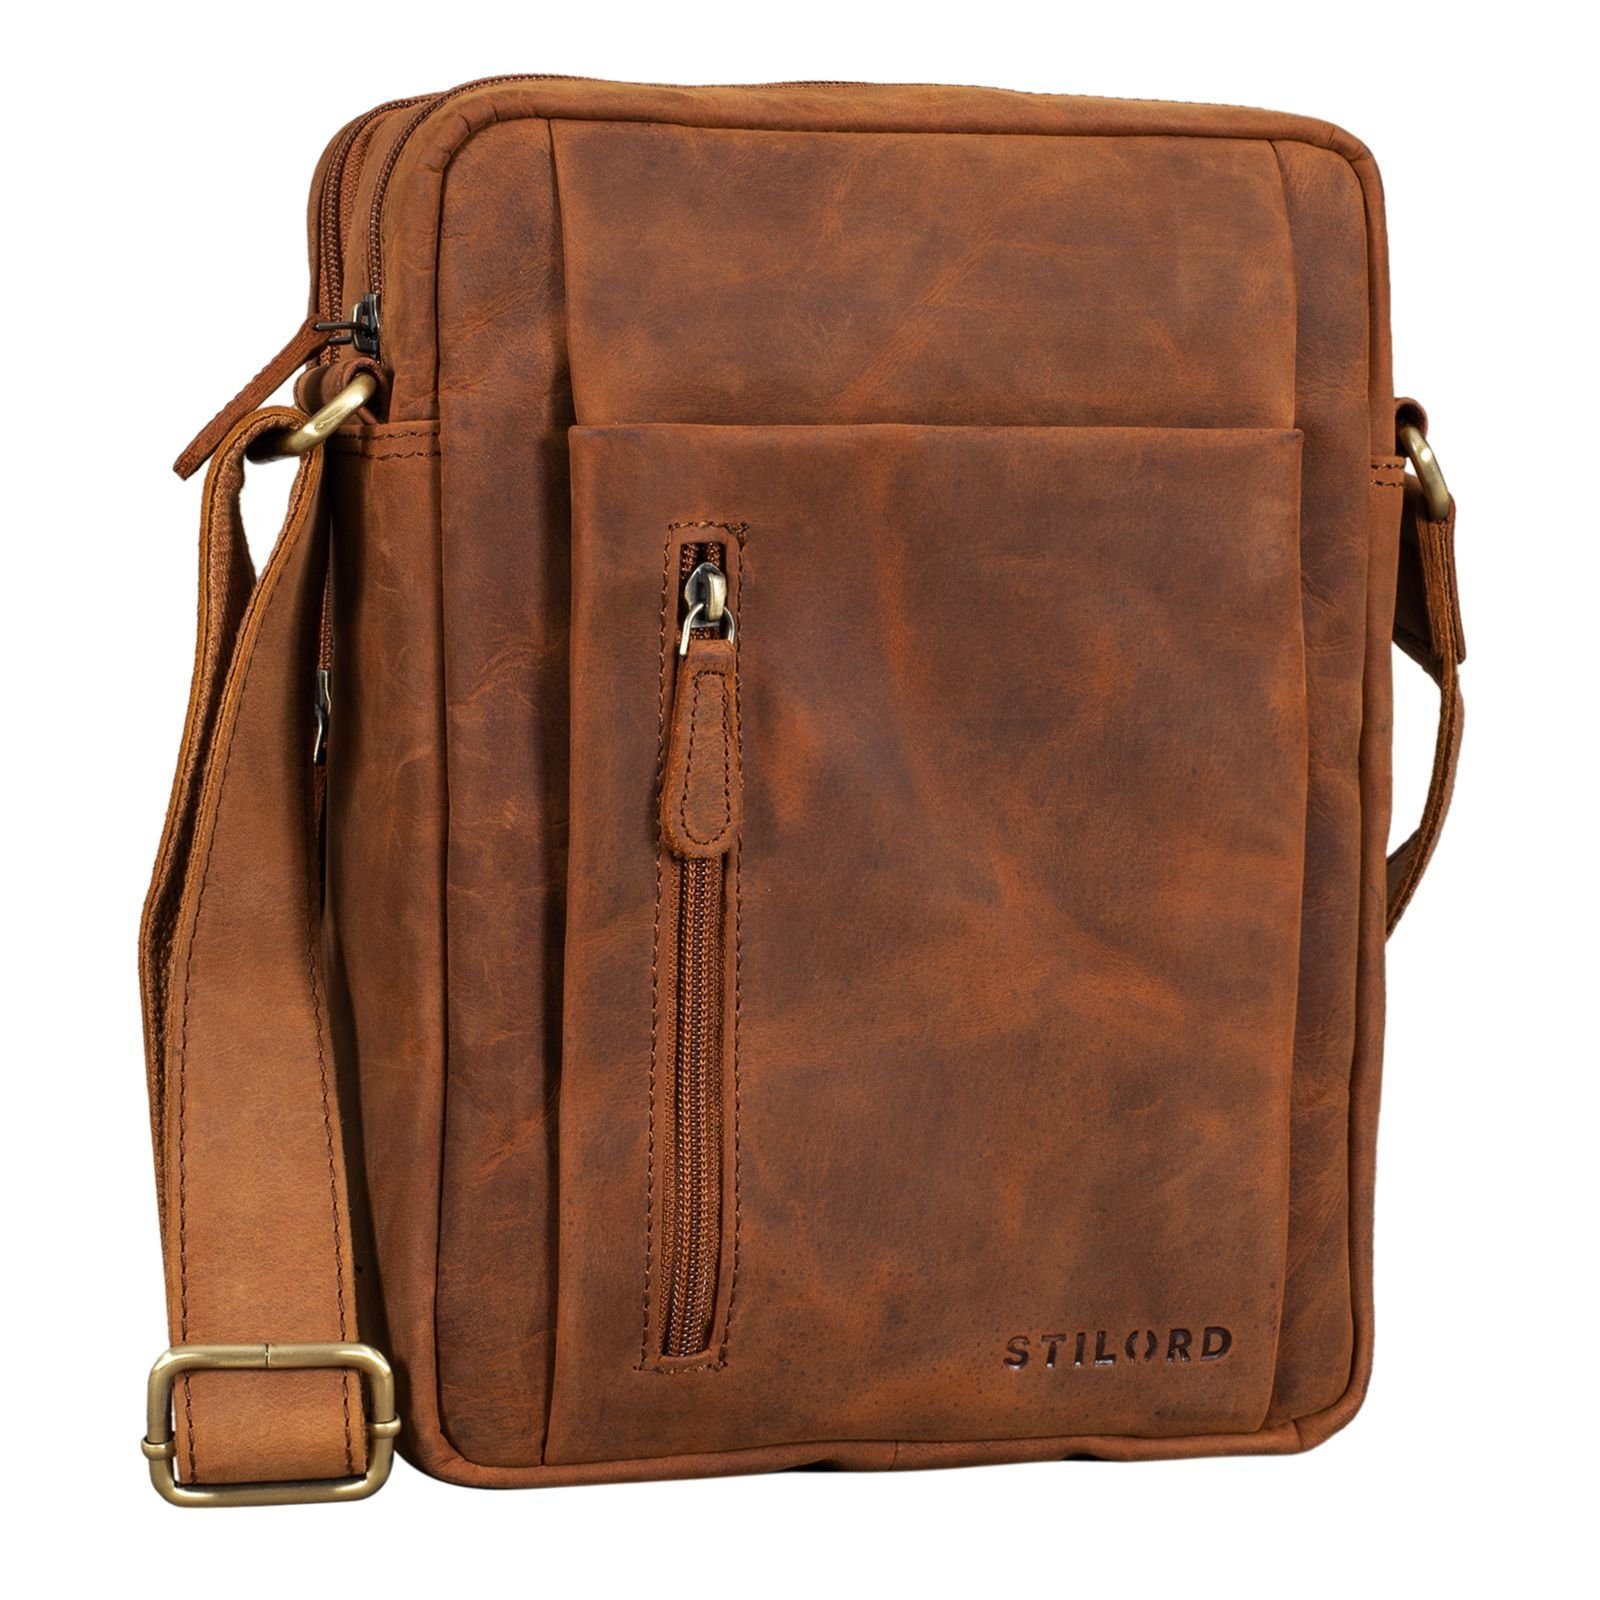 STILORD Messenger Bag "Irving" Vintage Leder Tasche Klein tan - dunkelbraun